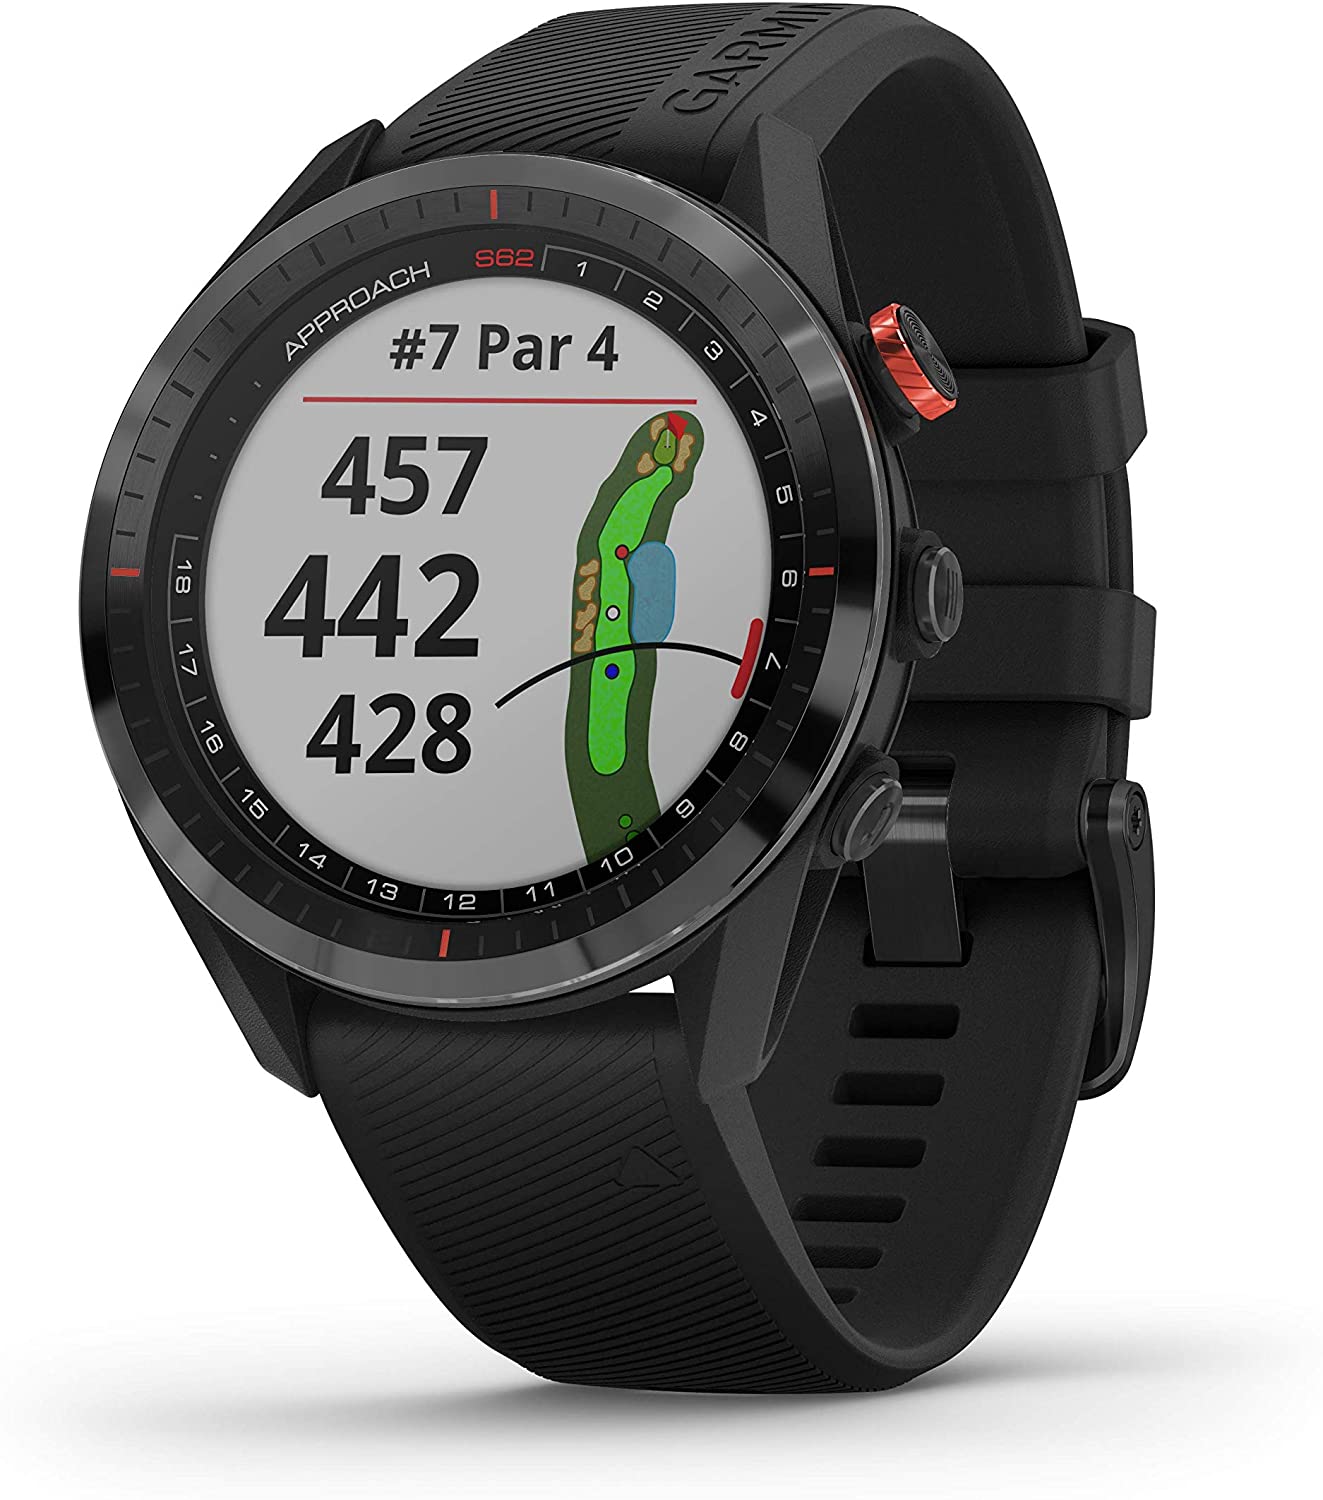 Garmin Approach S62 GPS Golf Watch (Black Bezel/Black Band) W/Accessories